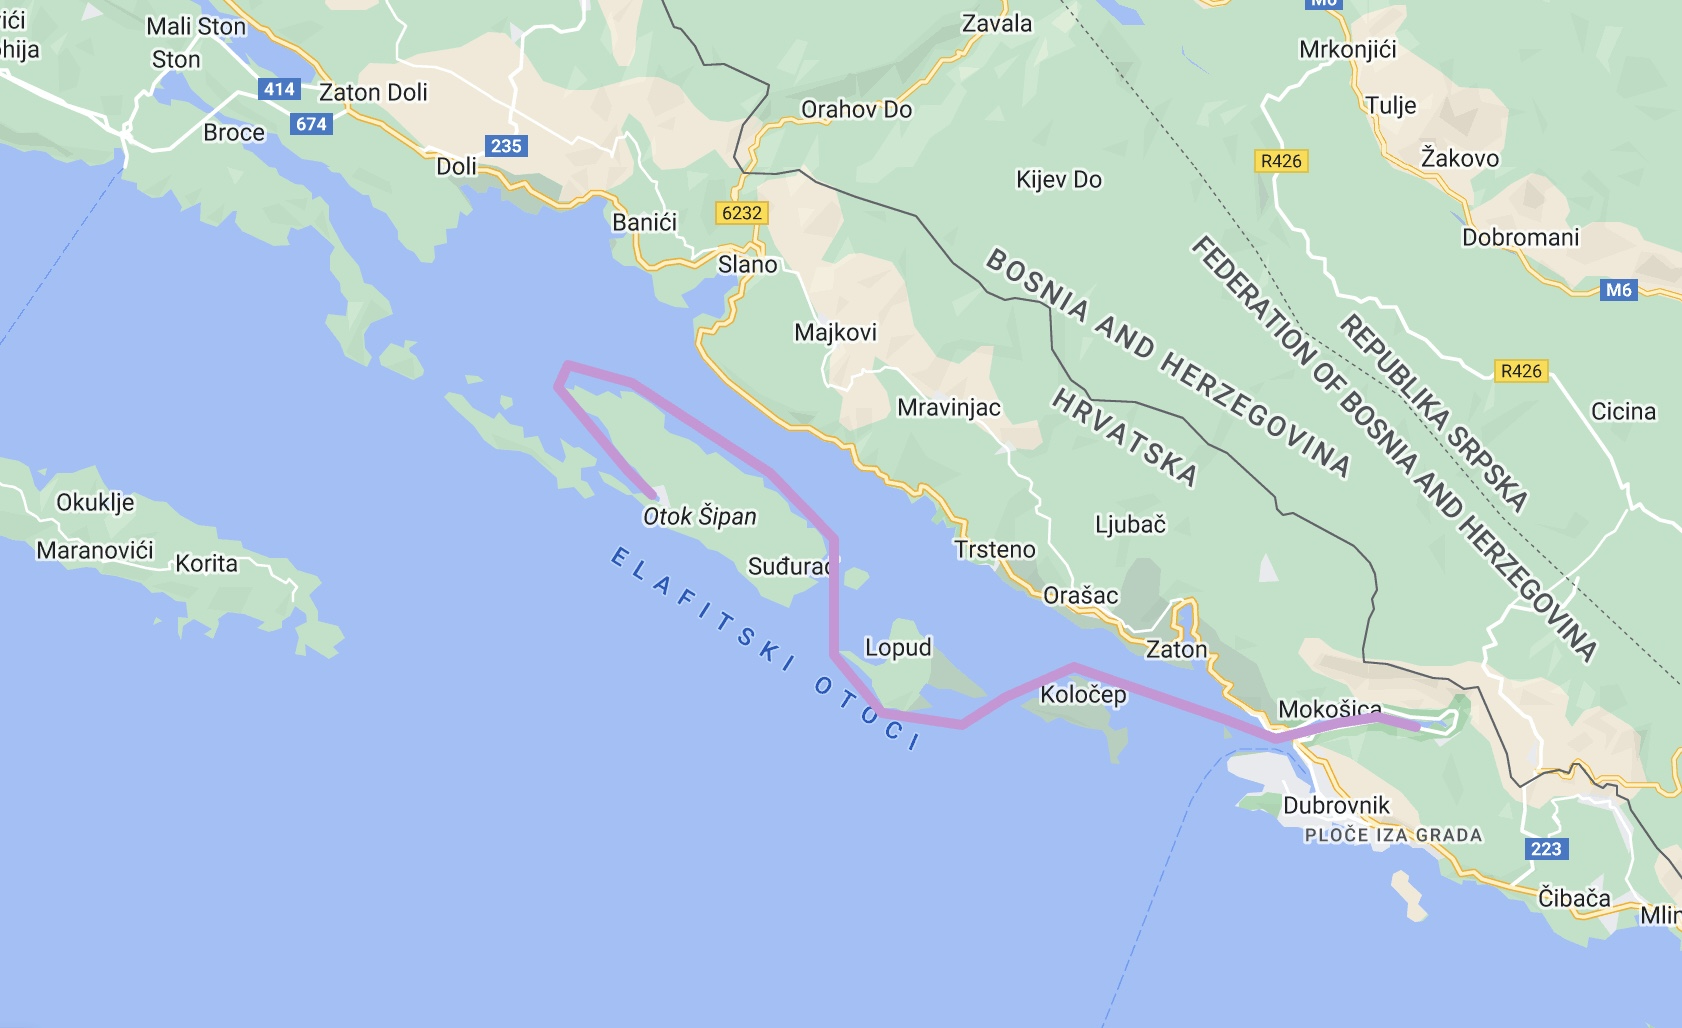 Sailing from Elafiti Islands to Dubrovnik